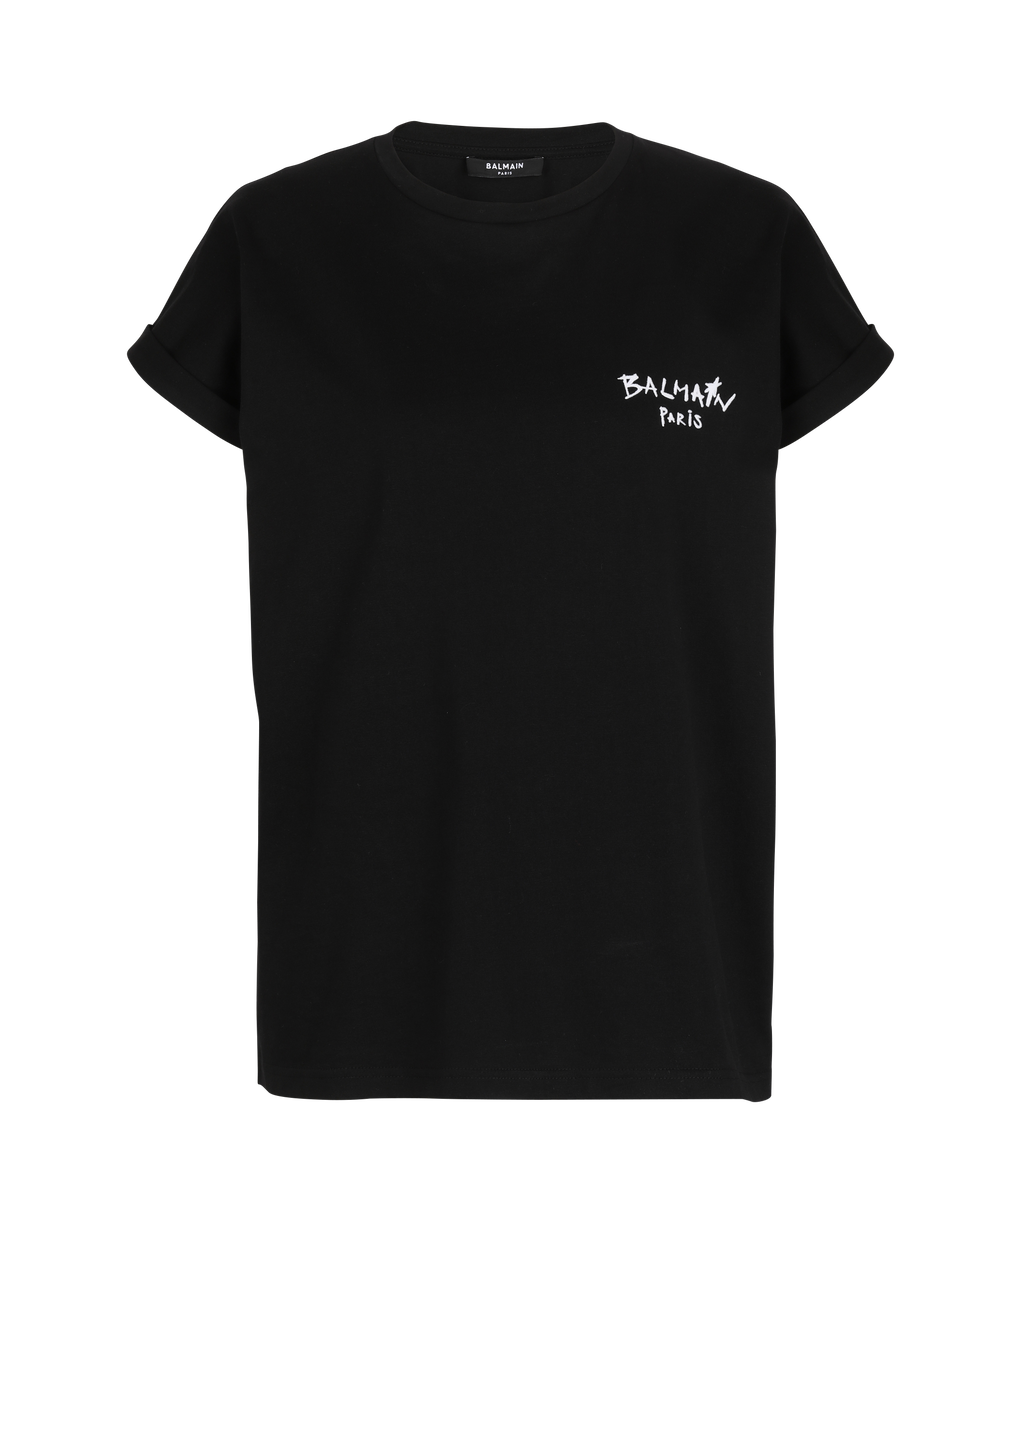 T-shirt en coton floqué petit logo graffiti Balmain, noir, hi-res